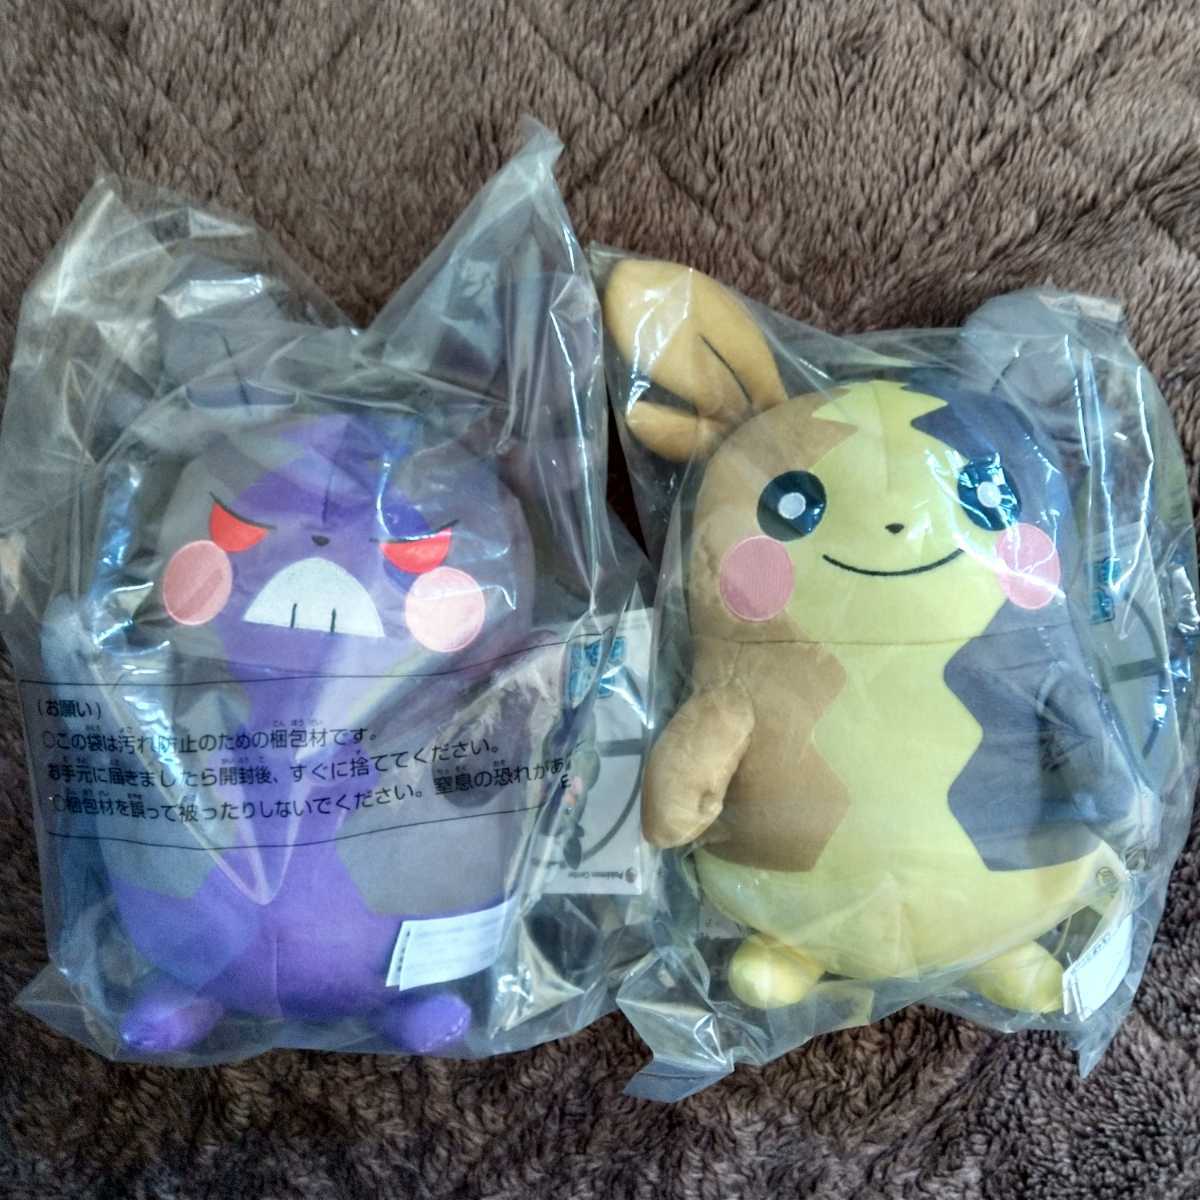  Pokemon center morupeko soft toy 2 kind set ..... for is .... for 